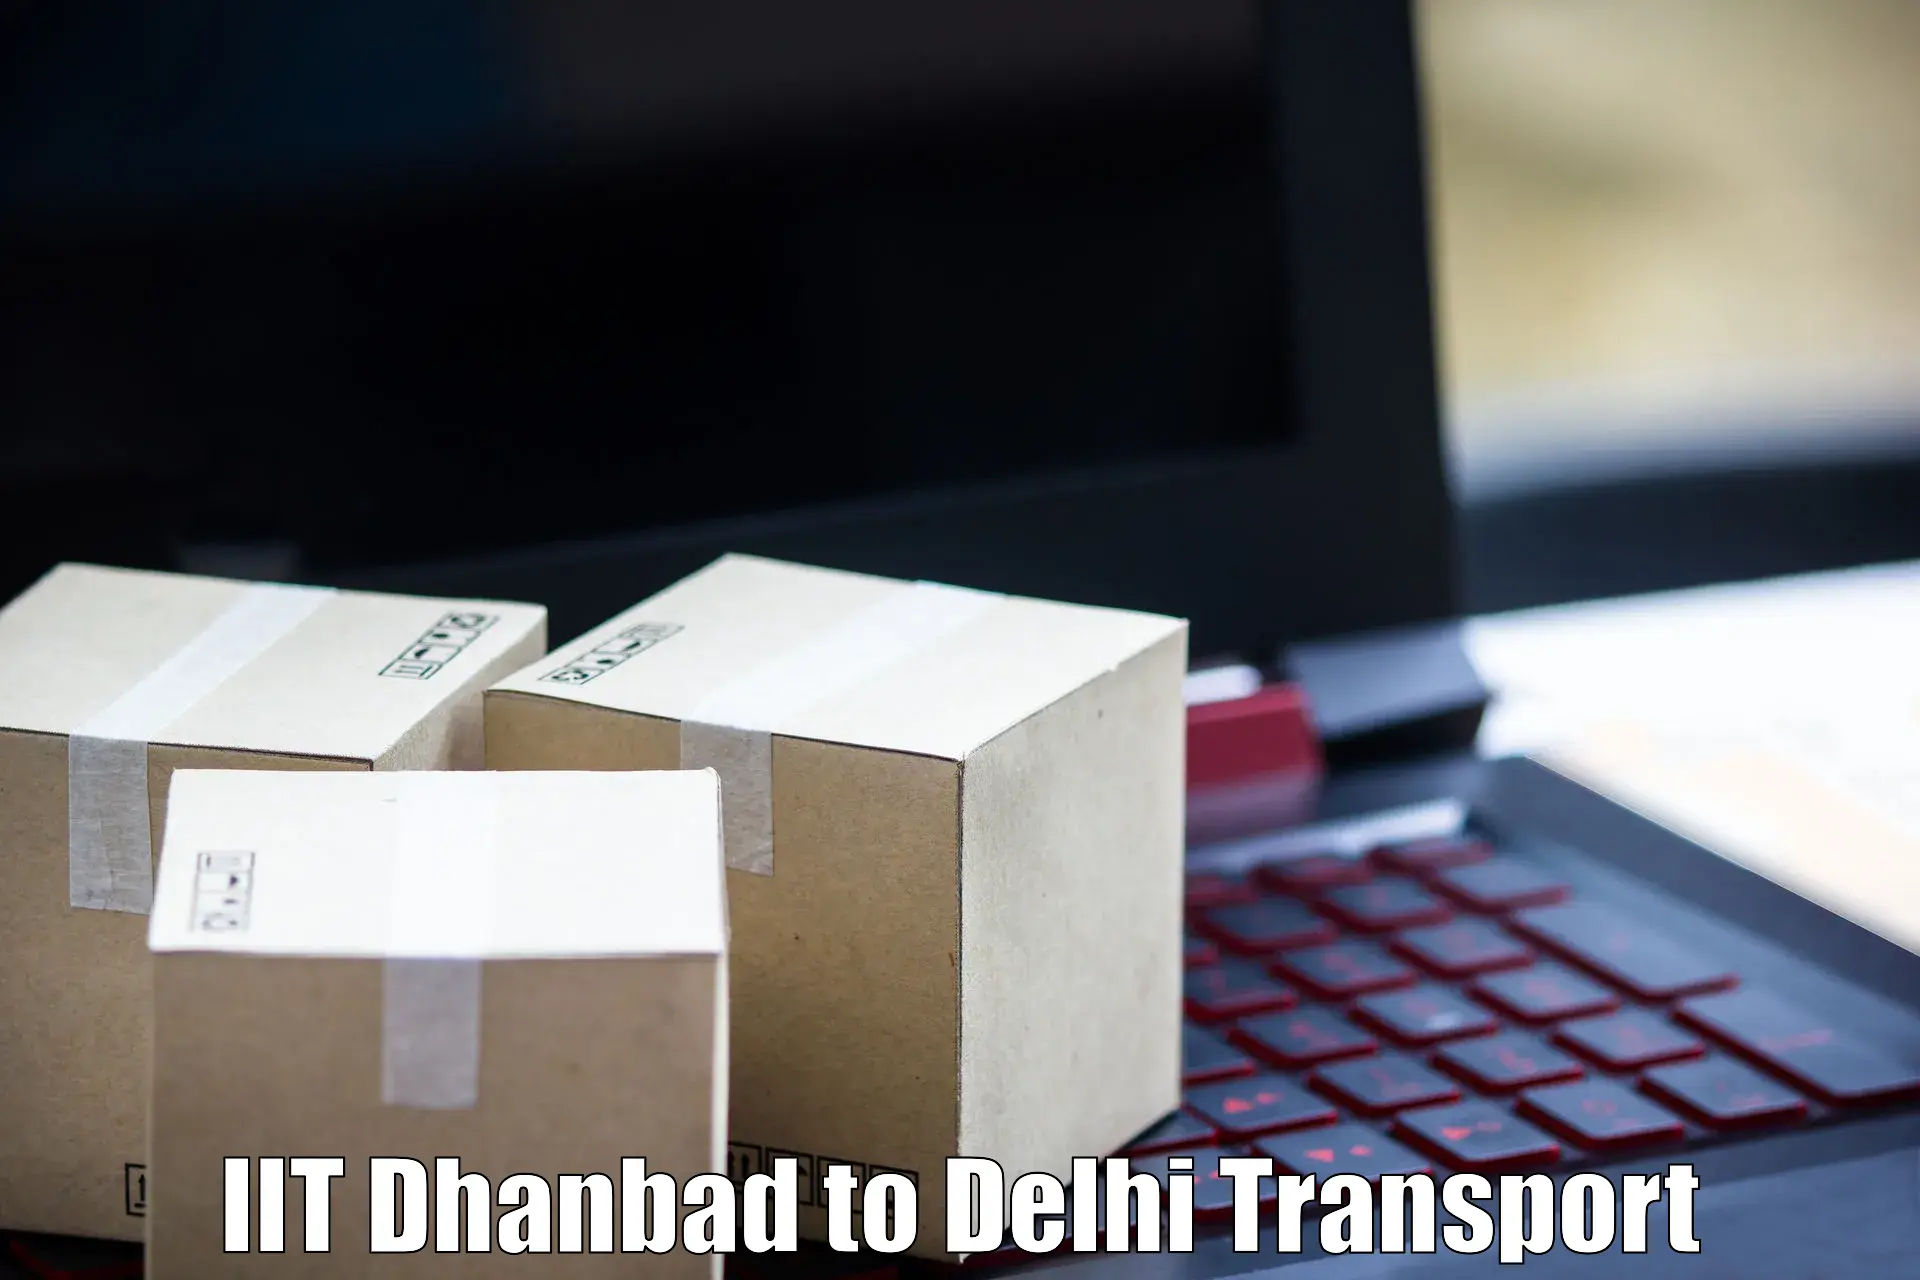 Pick up transport service IIT Dhanbad to Sansad Marg